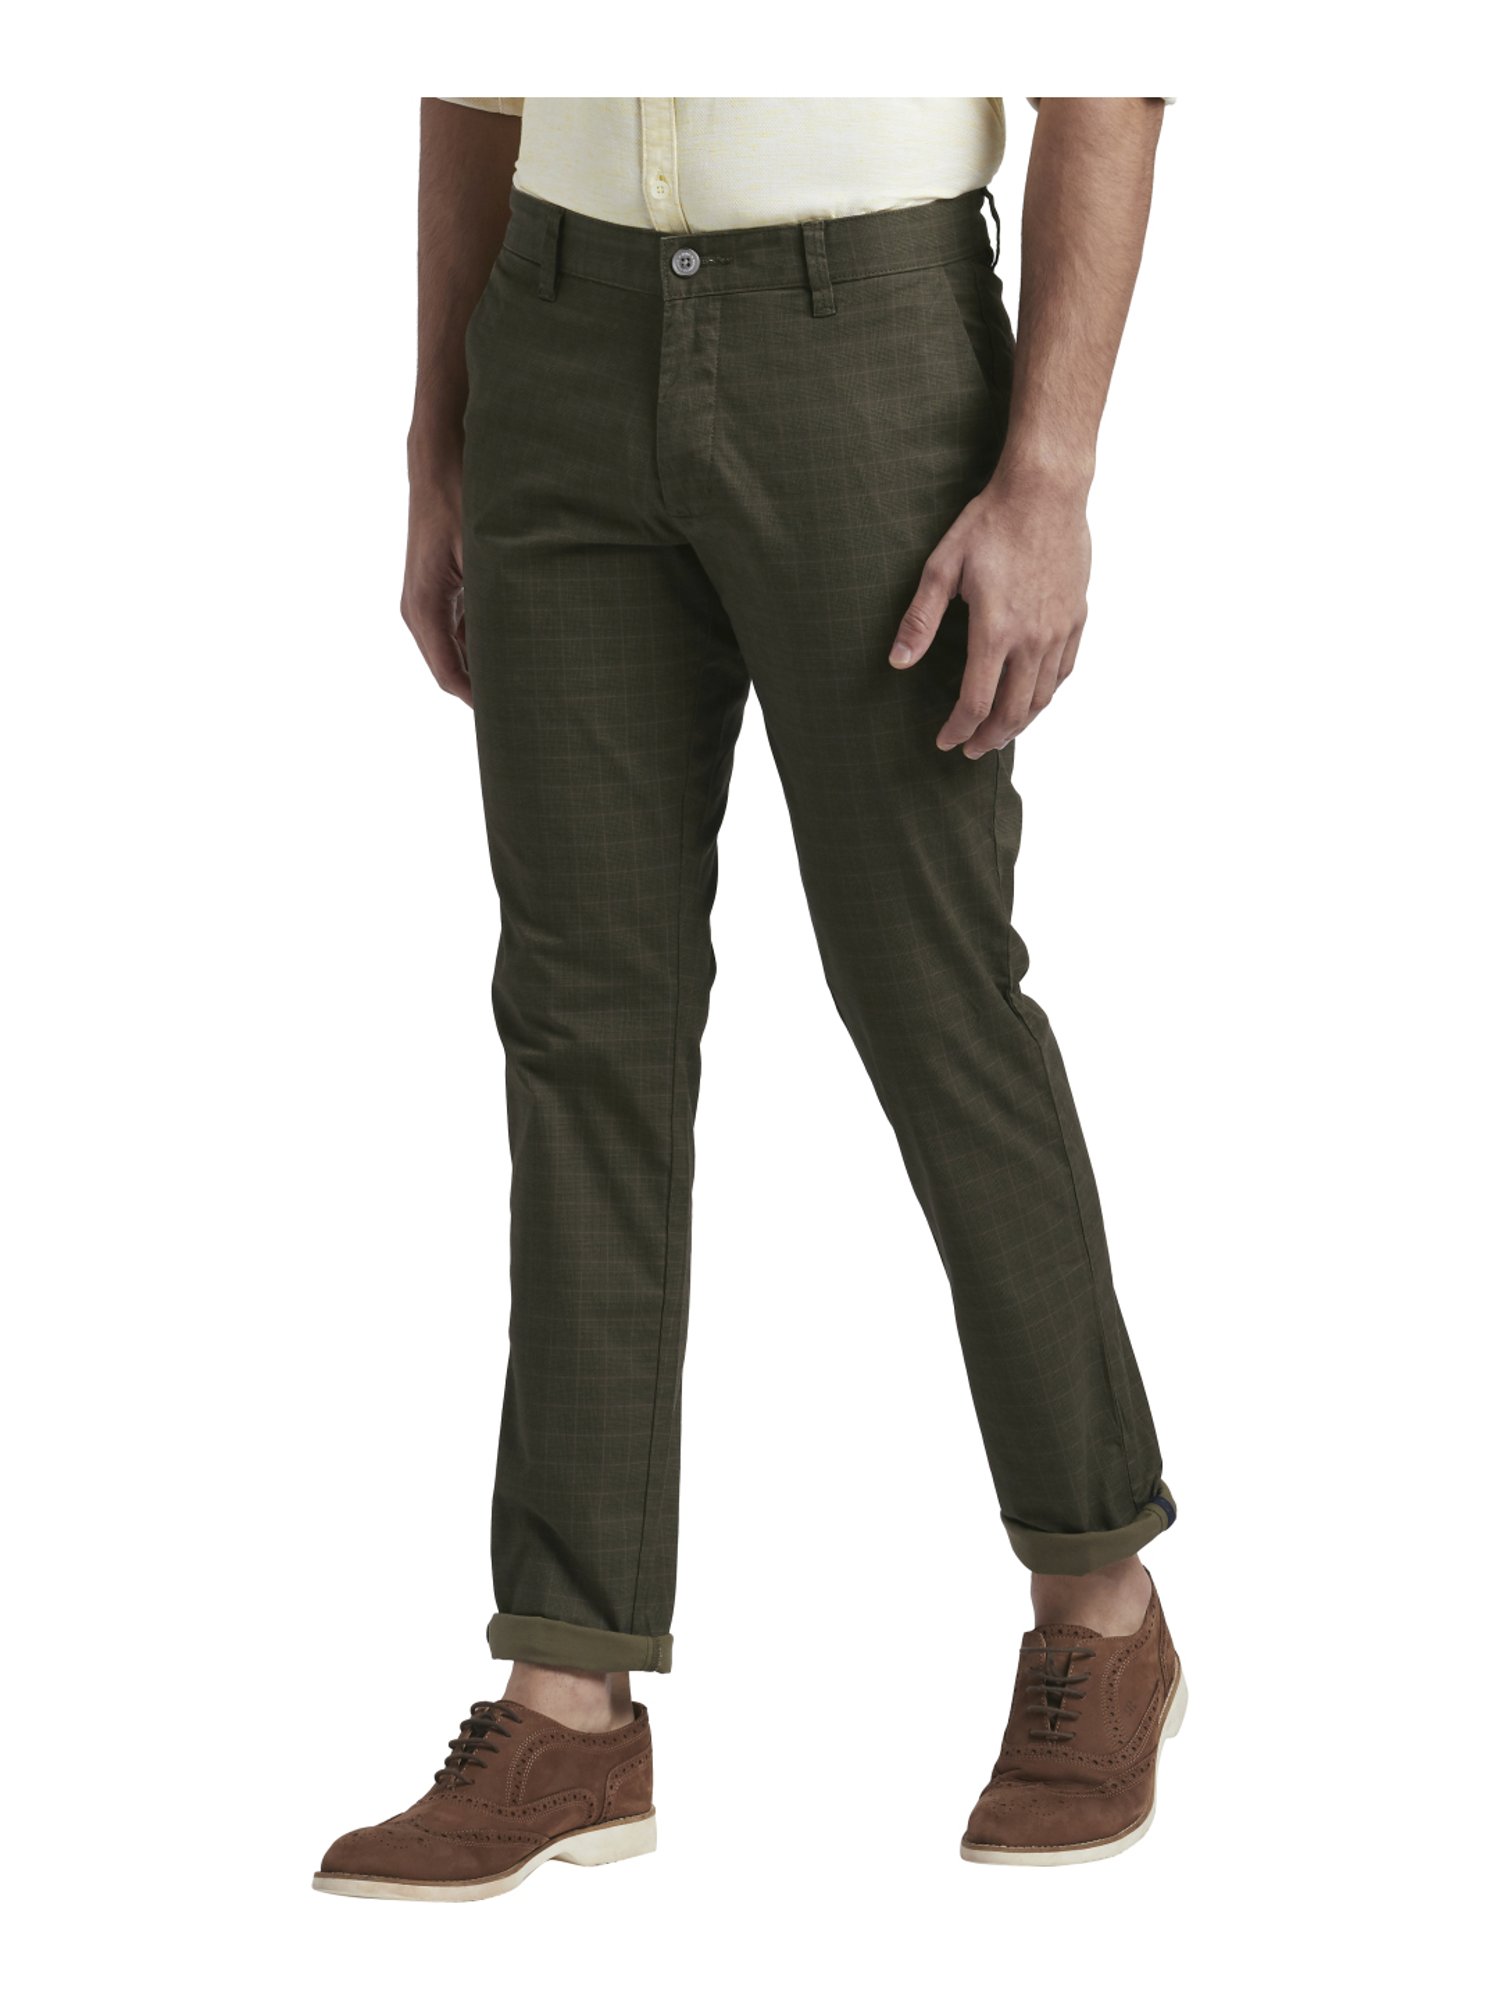 Parx Casual Trousers  Buy Parx Medium Khaki Trousers Online  Nykaa  Fashion